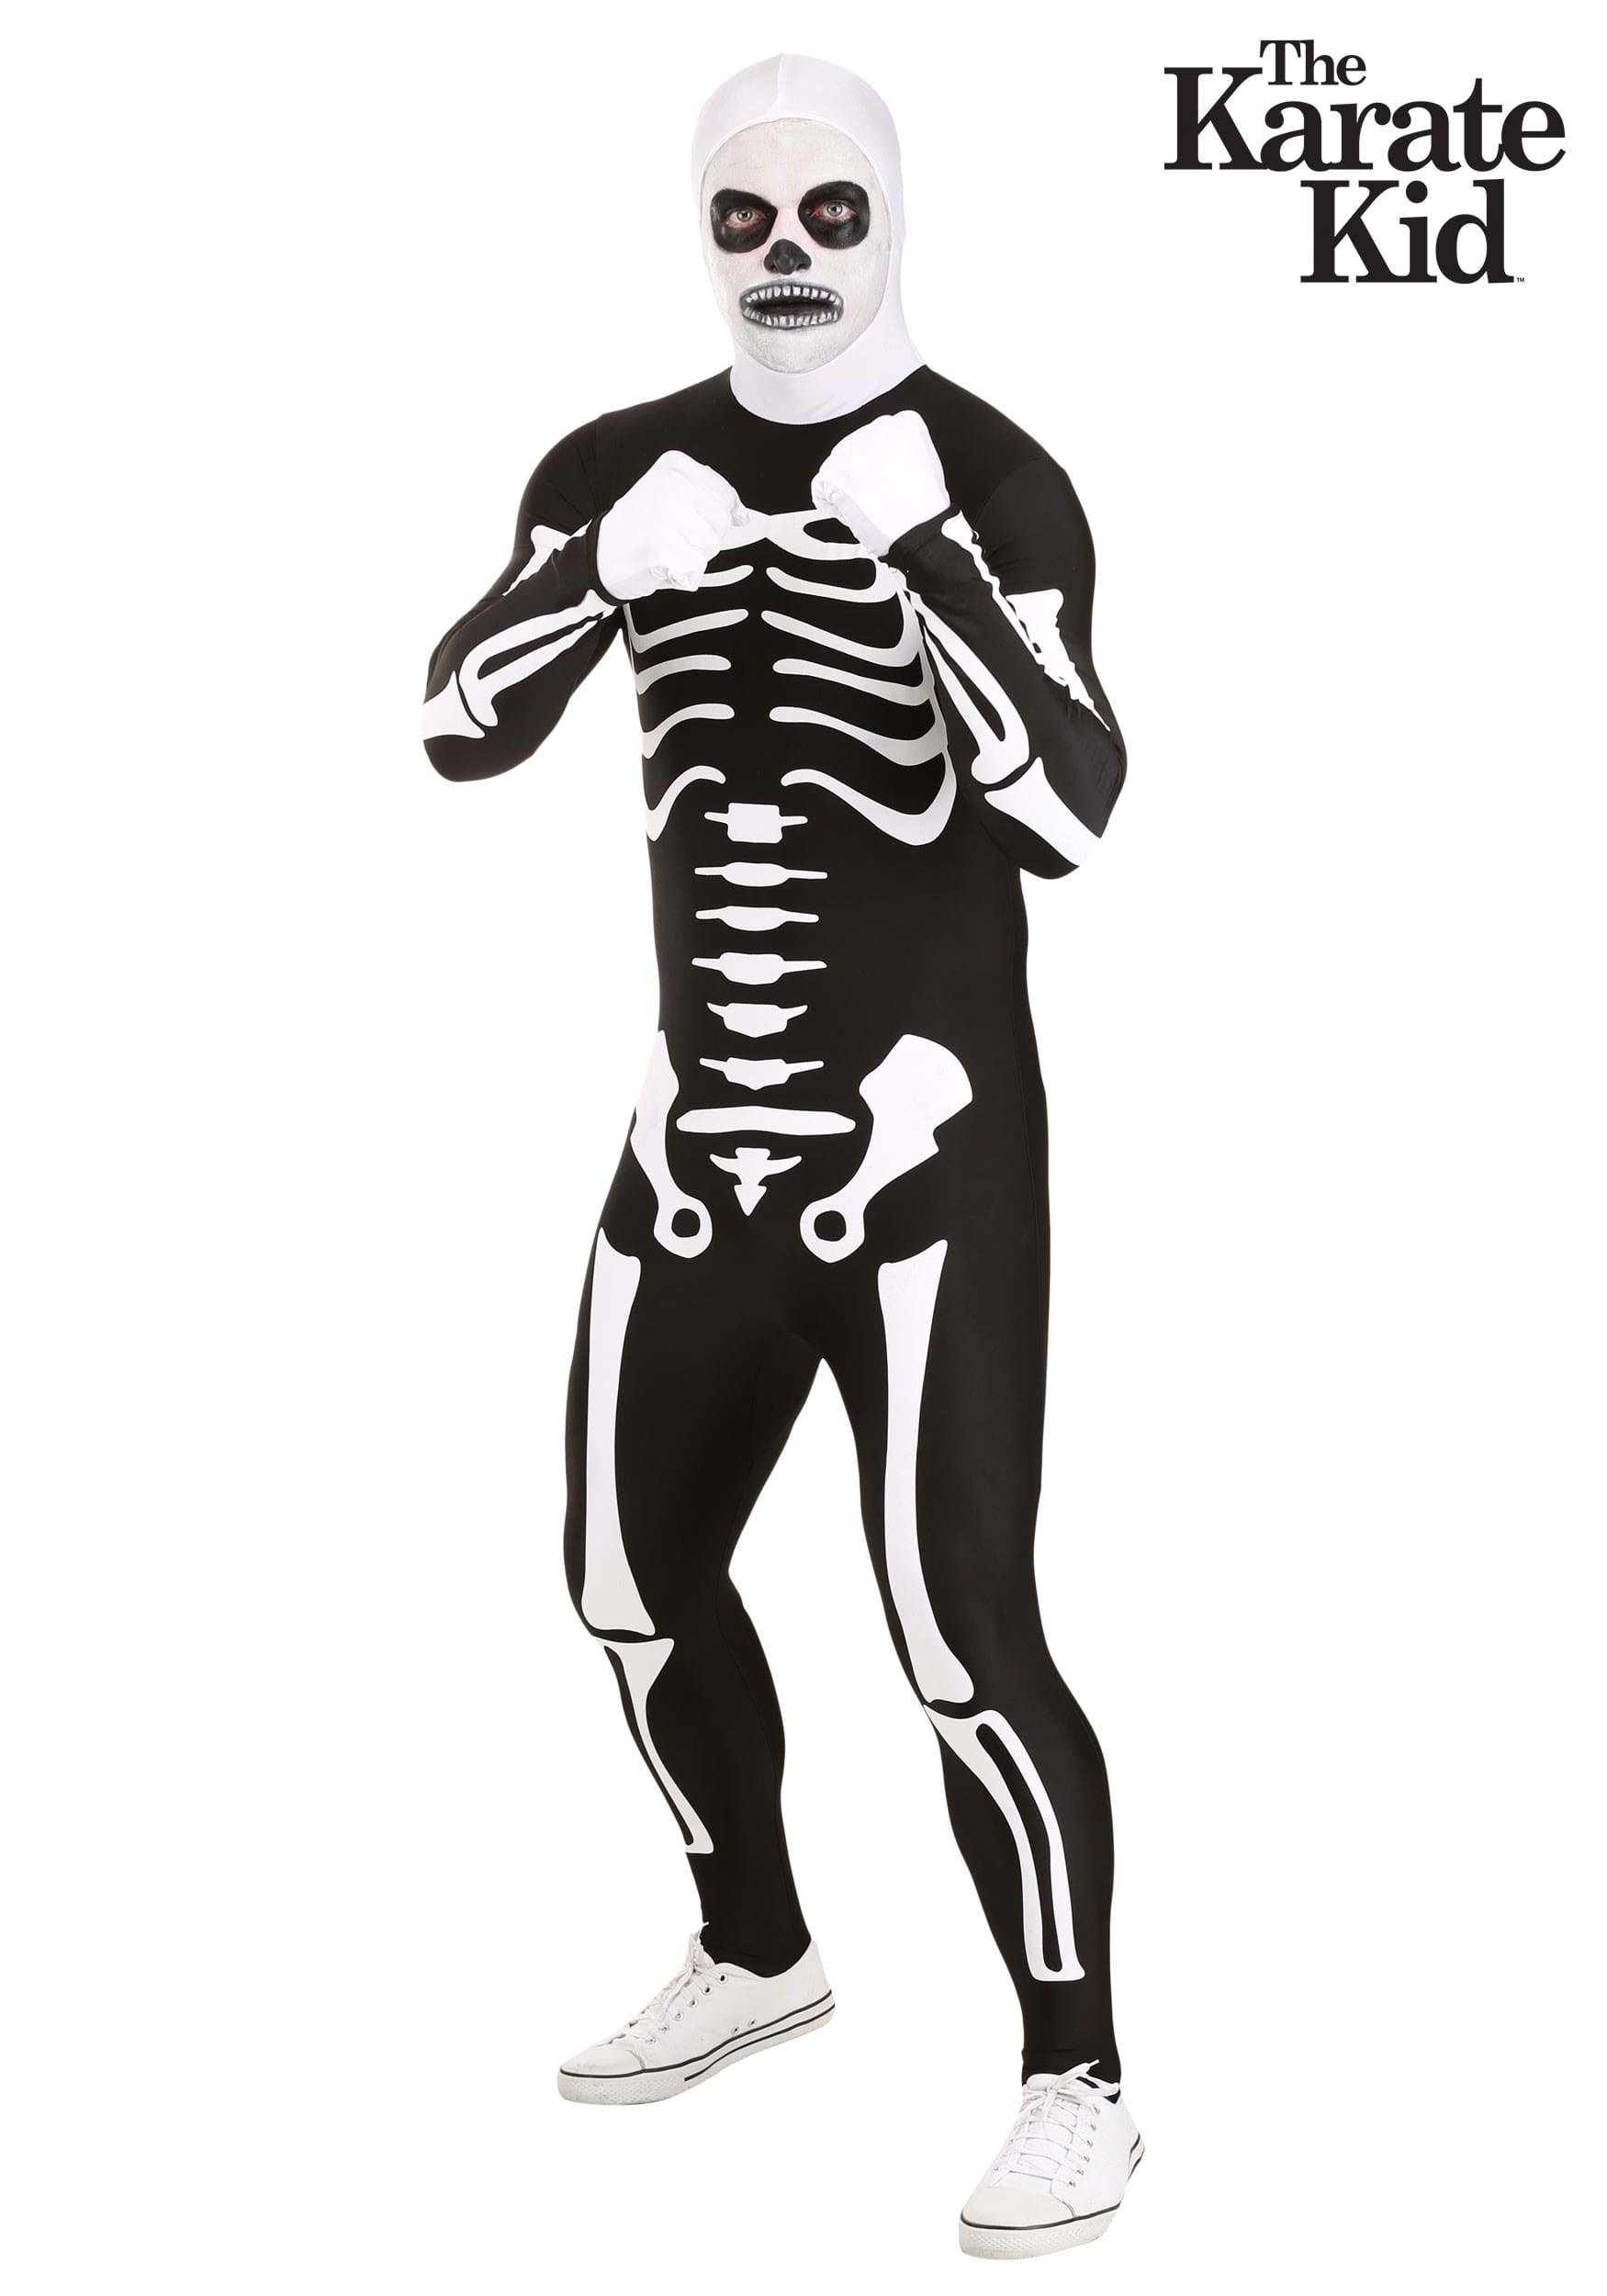 Skeleton Printed Formal Tuxedo Mens Adult Halloween Costume 